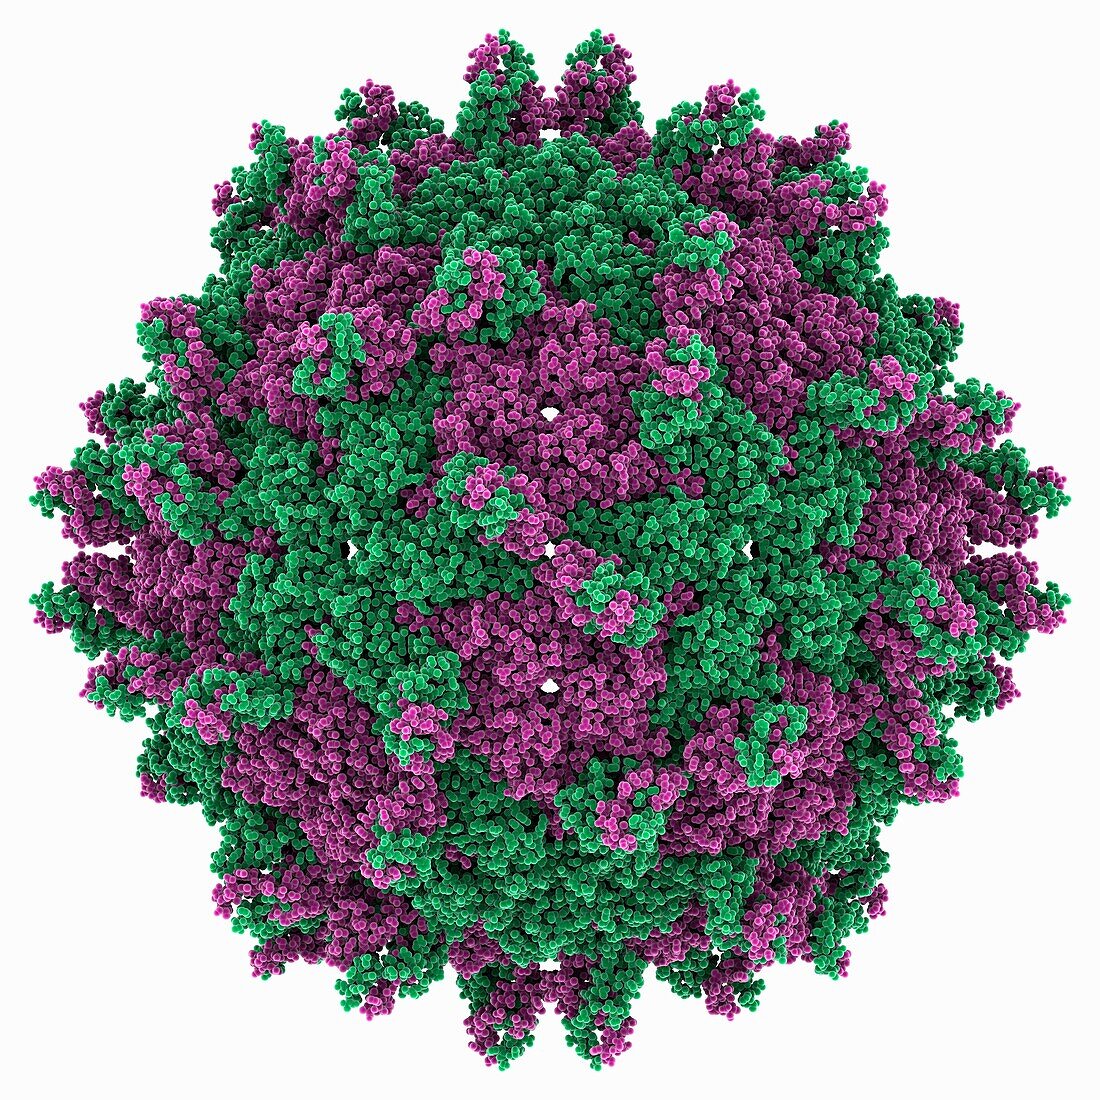 Pepper cryptic virus 1 capsid, molecular model